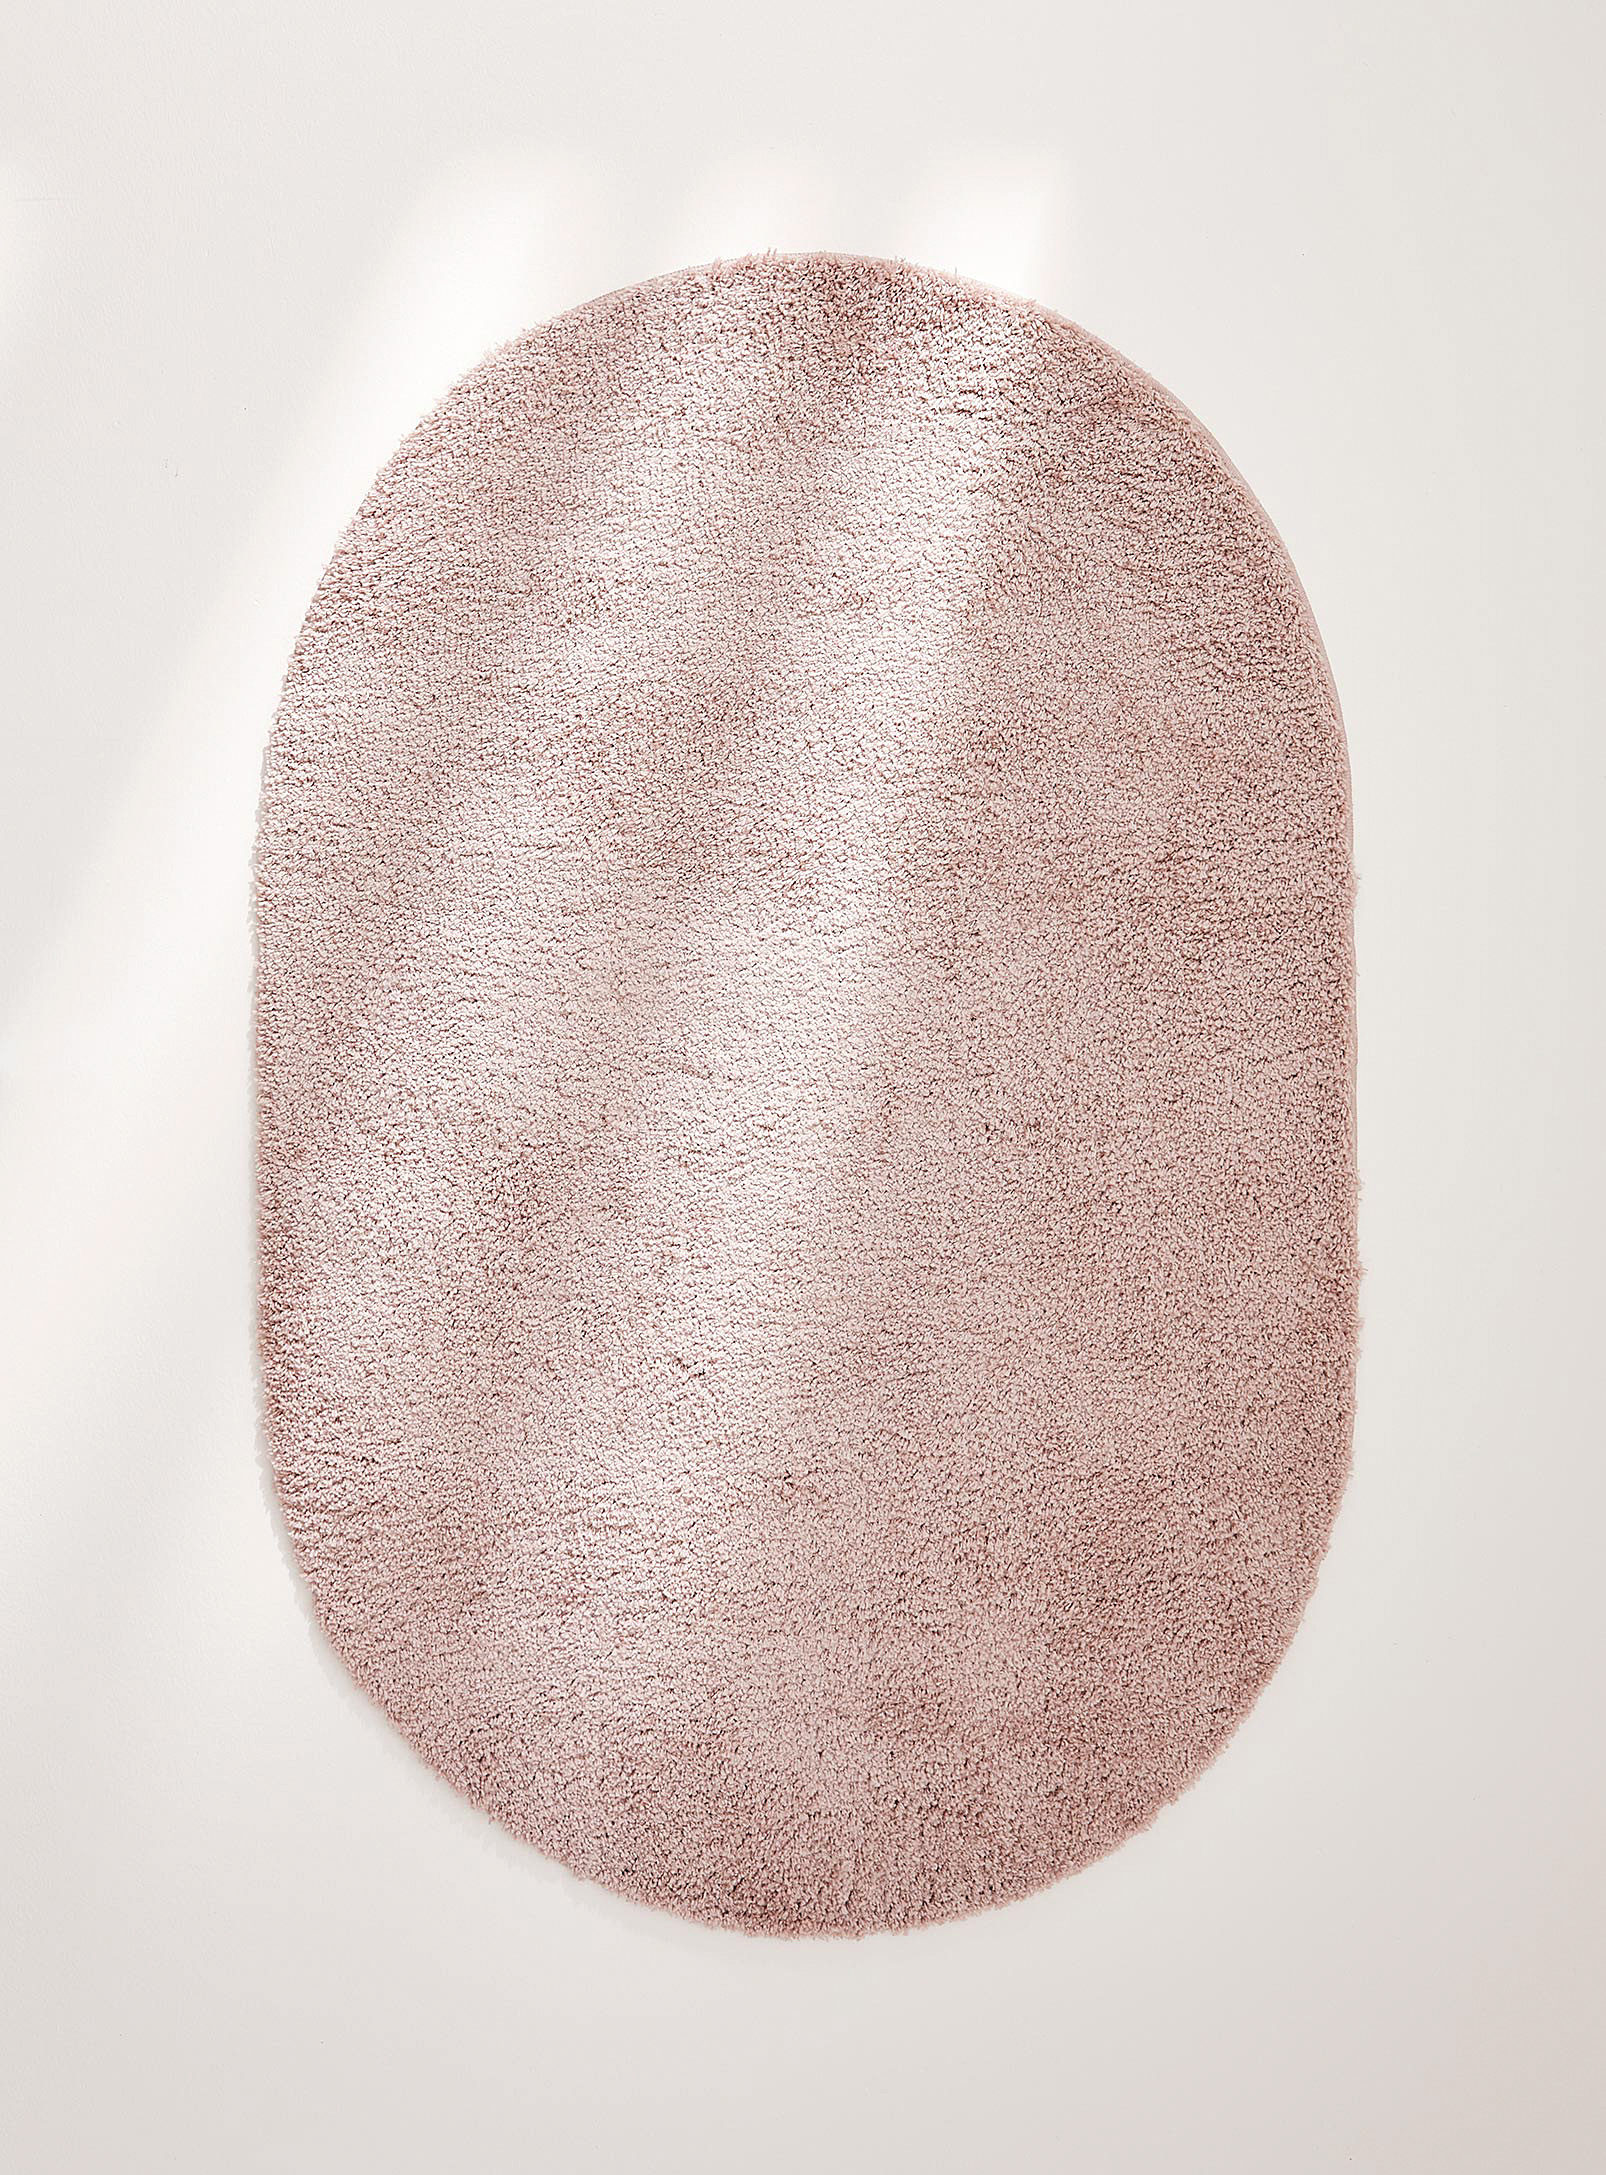 Simons Maison Nature's Essence Oval Shag Rug 120 X 180 Cm In Dusky Pink